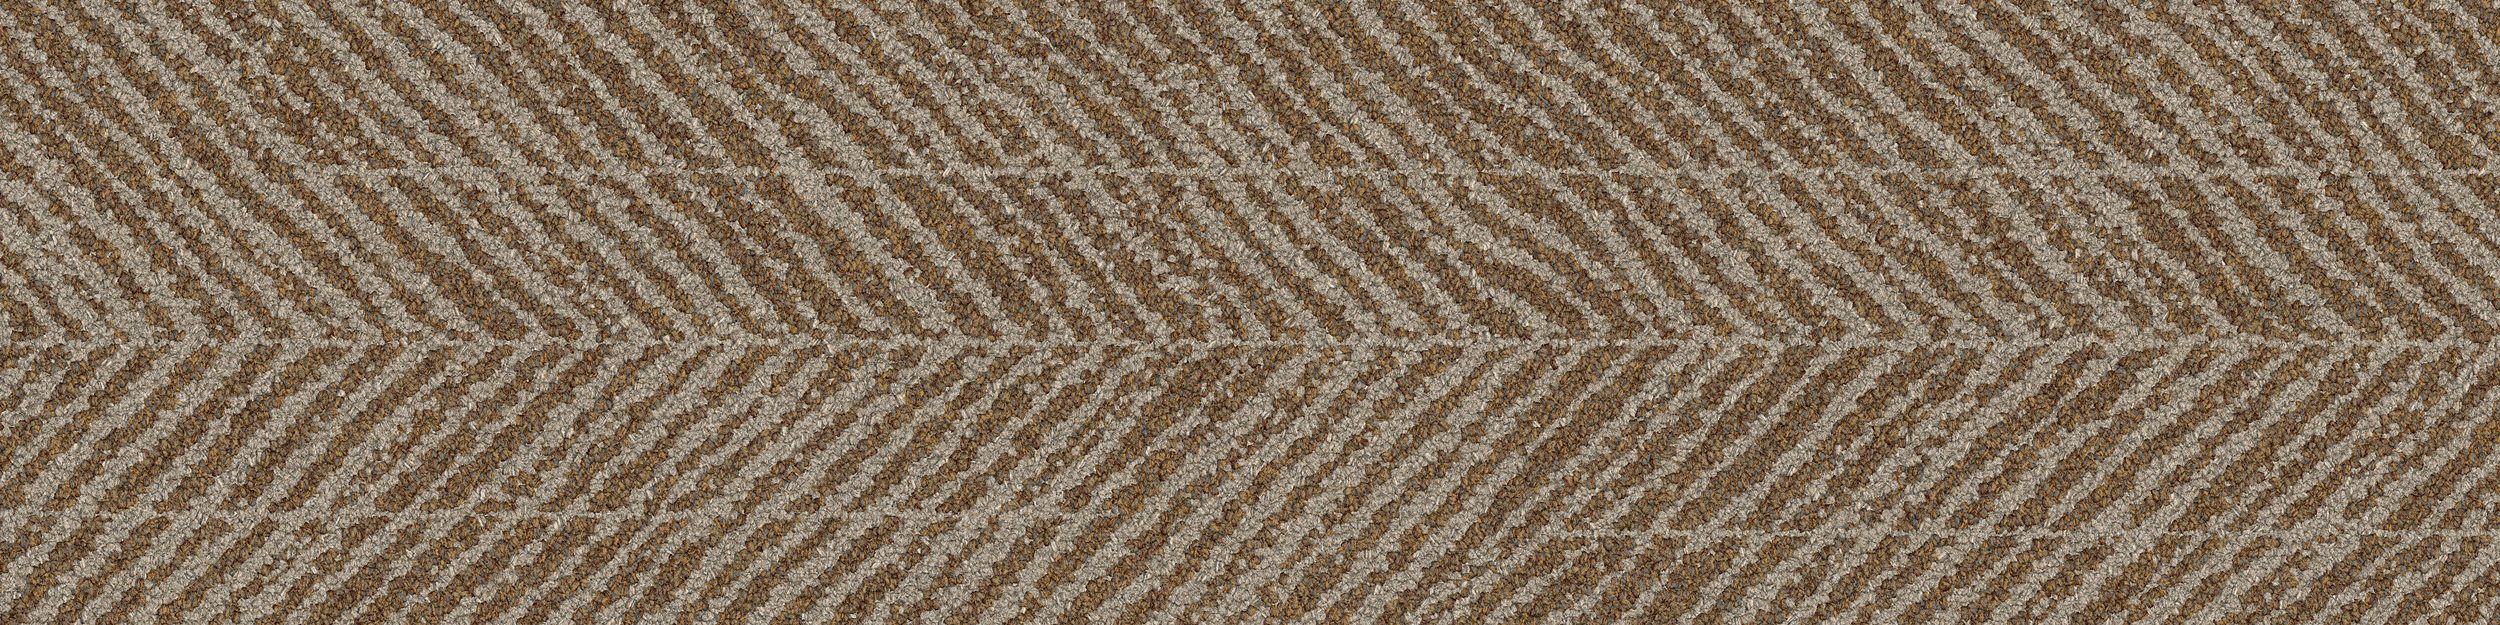 Third Space 310 Carpet Tile in Amber imagen número 2